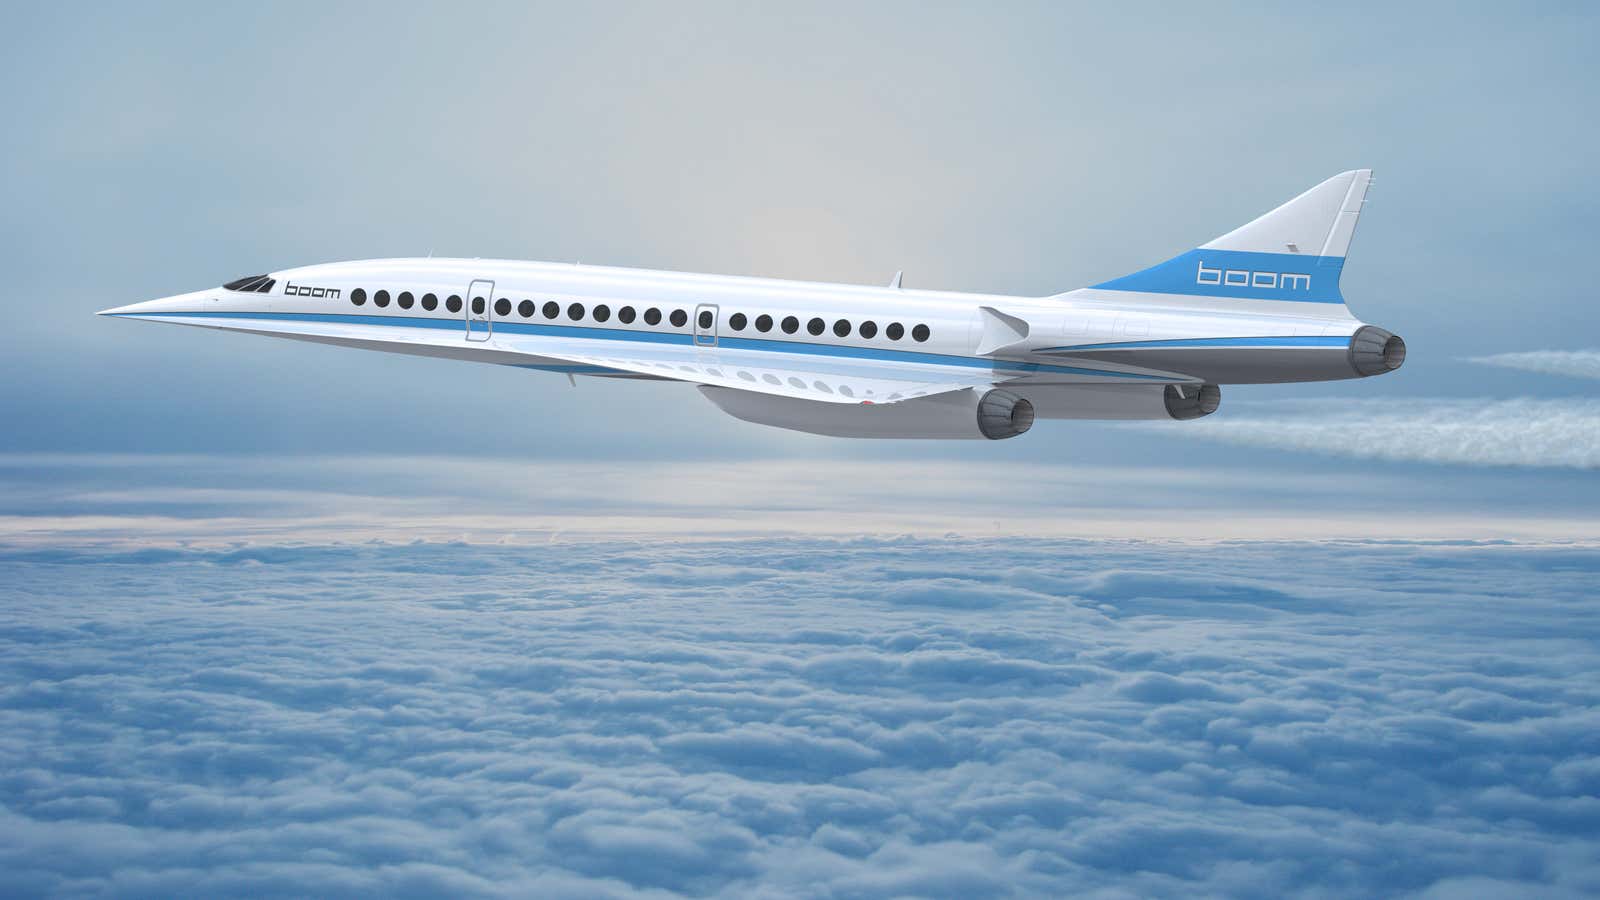 Prototype of the supersonic jet.